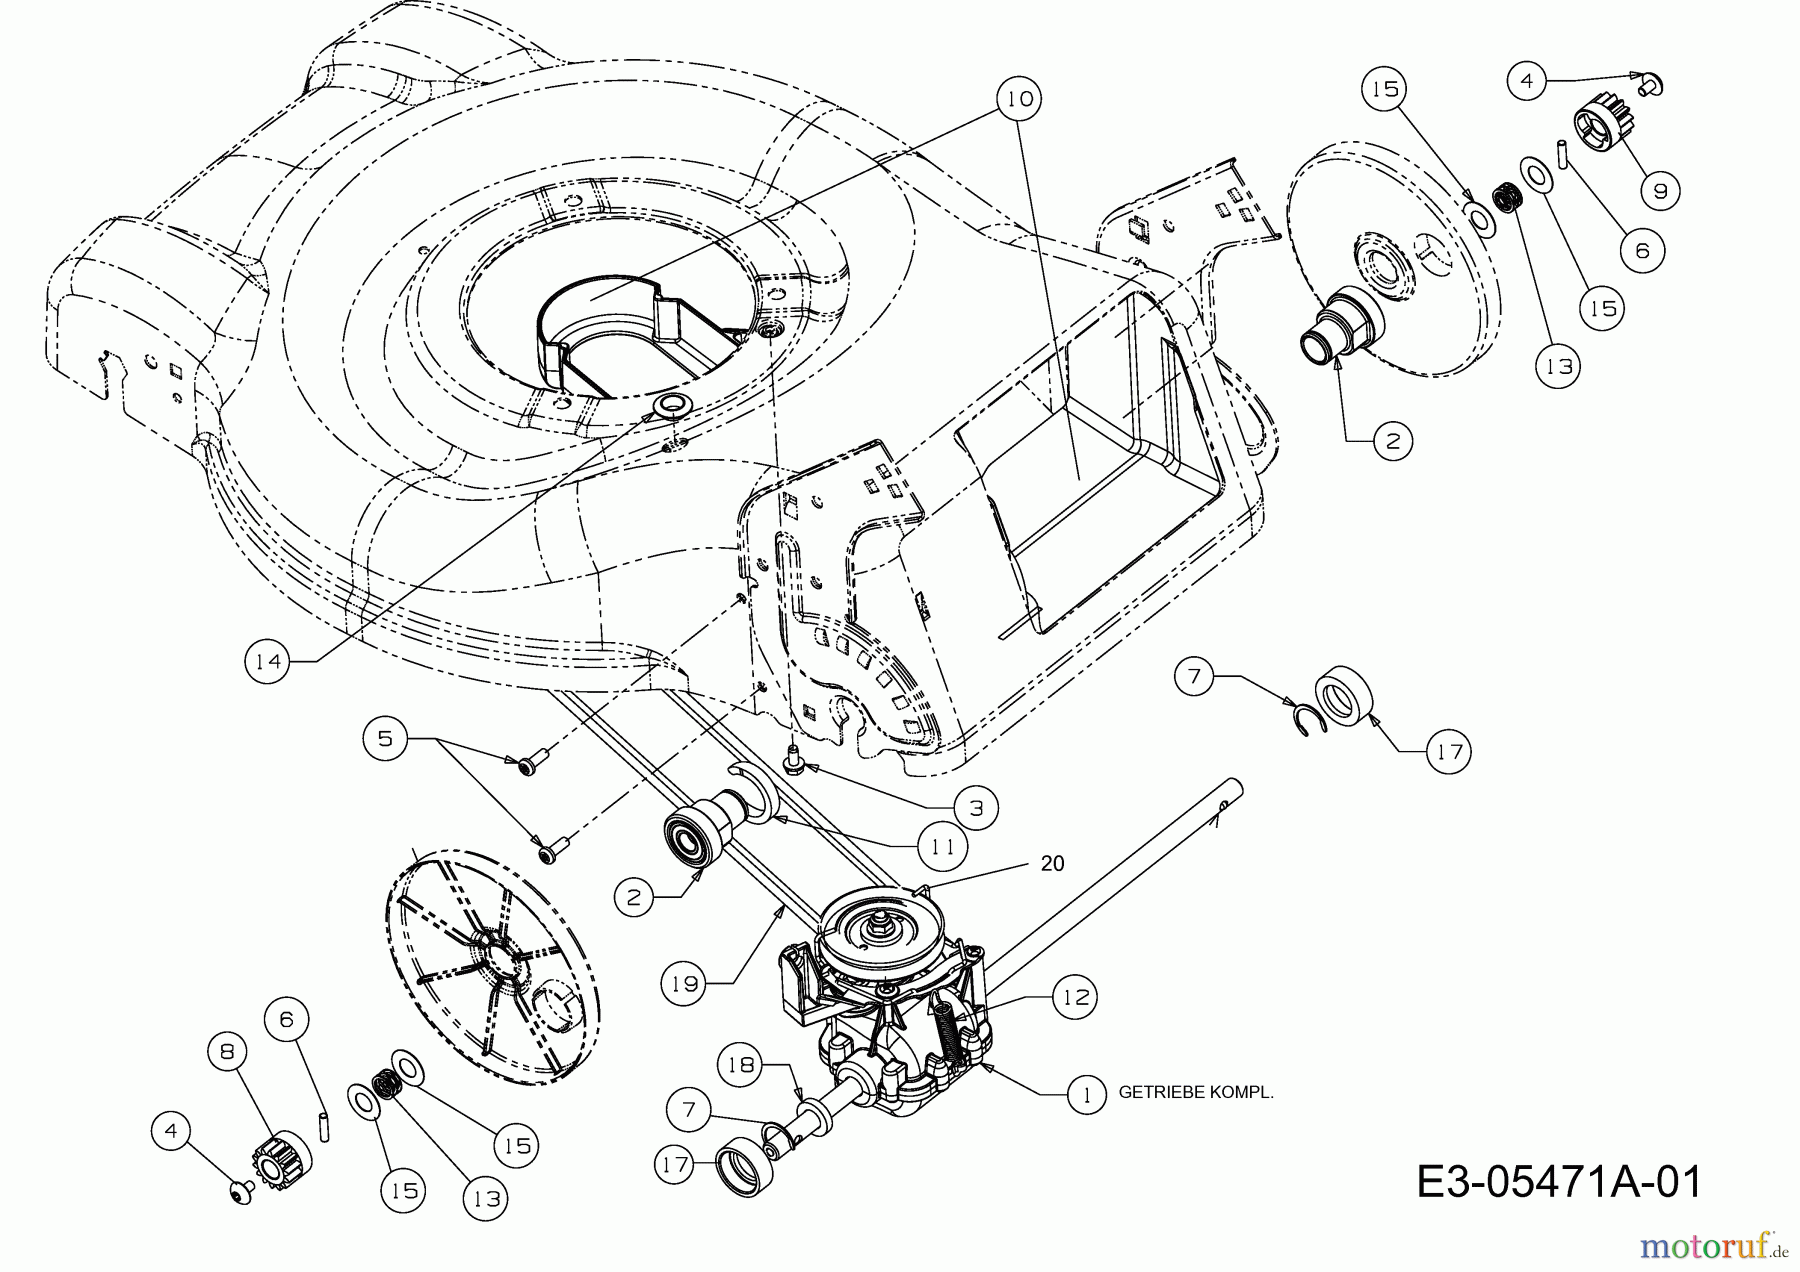  Bricoline Petrol mower self propelled 46 SP 12E-J54J625  (2011) Gearbox